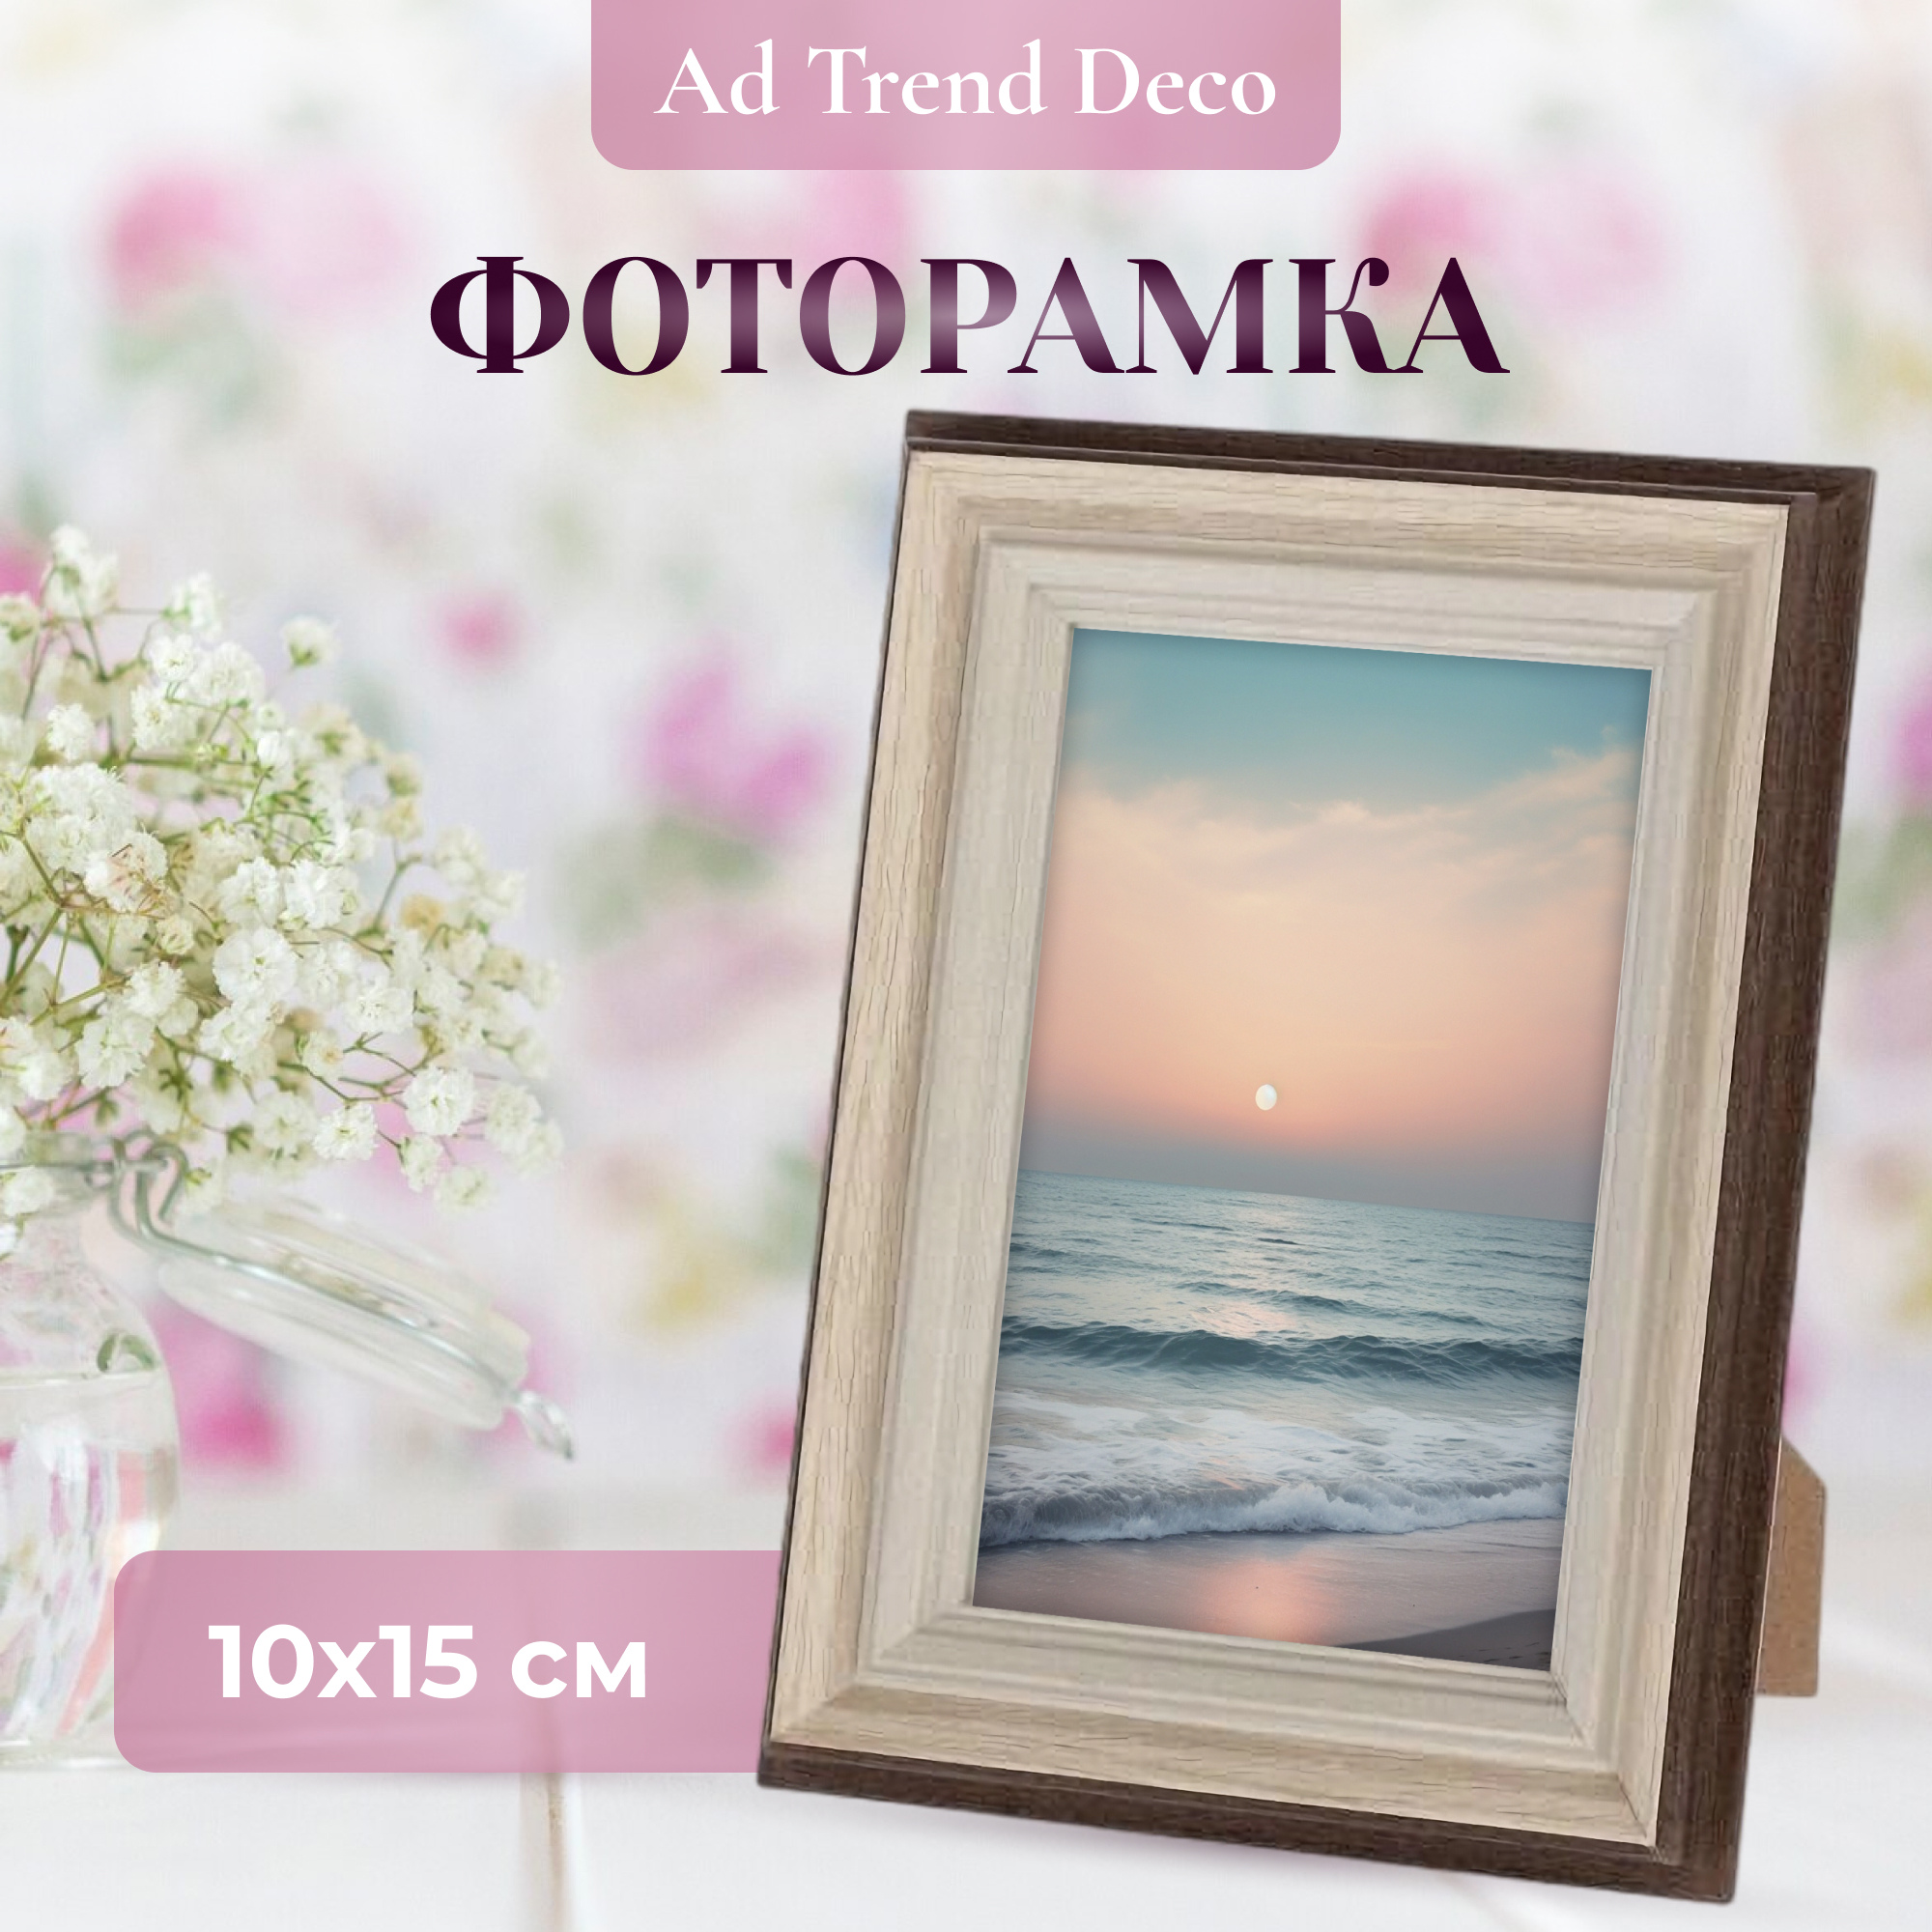 Фоторамка Ad trend deco Dima 10x15 см в ассортименте - фото 2